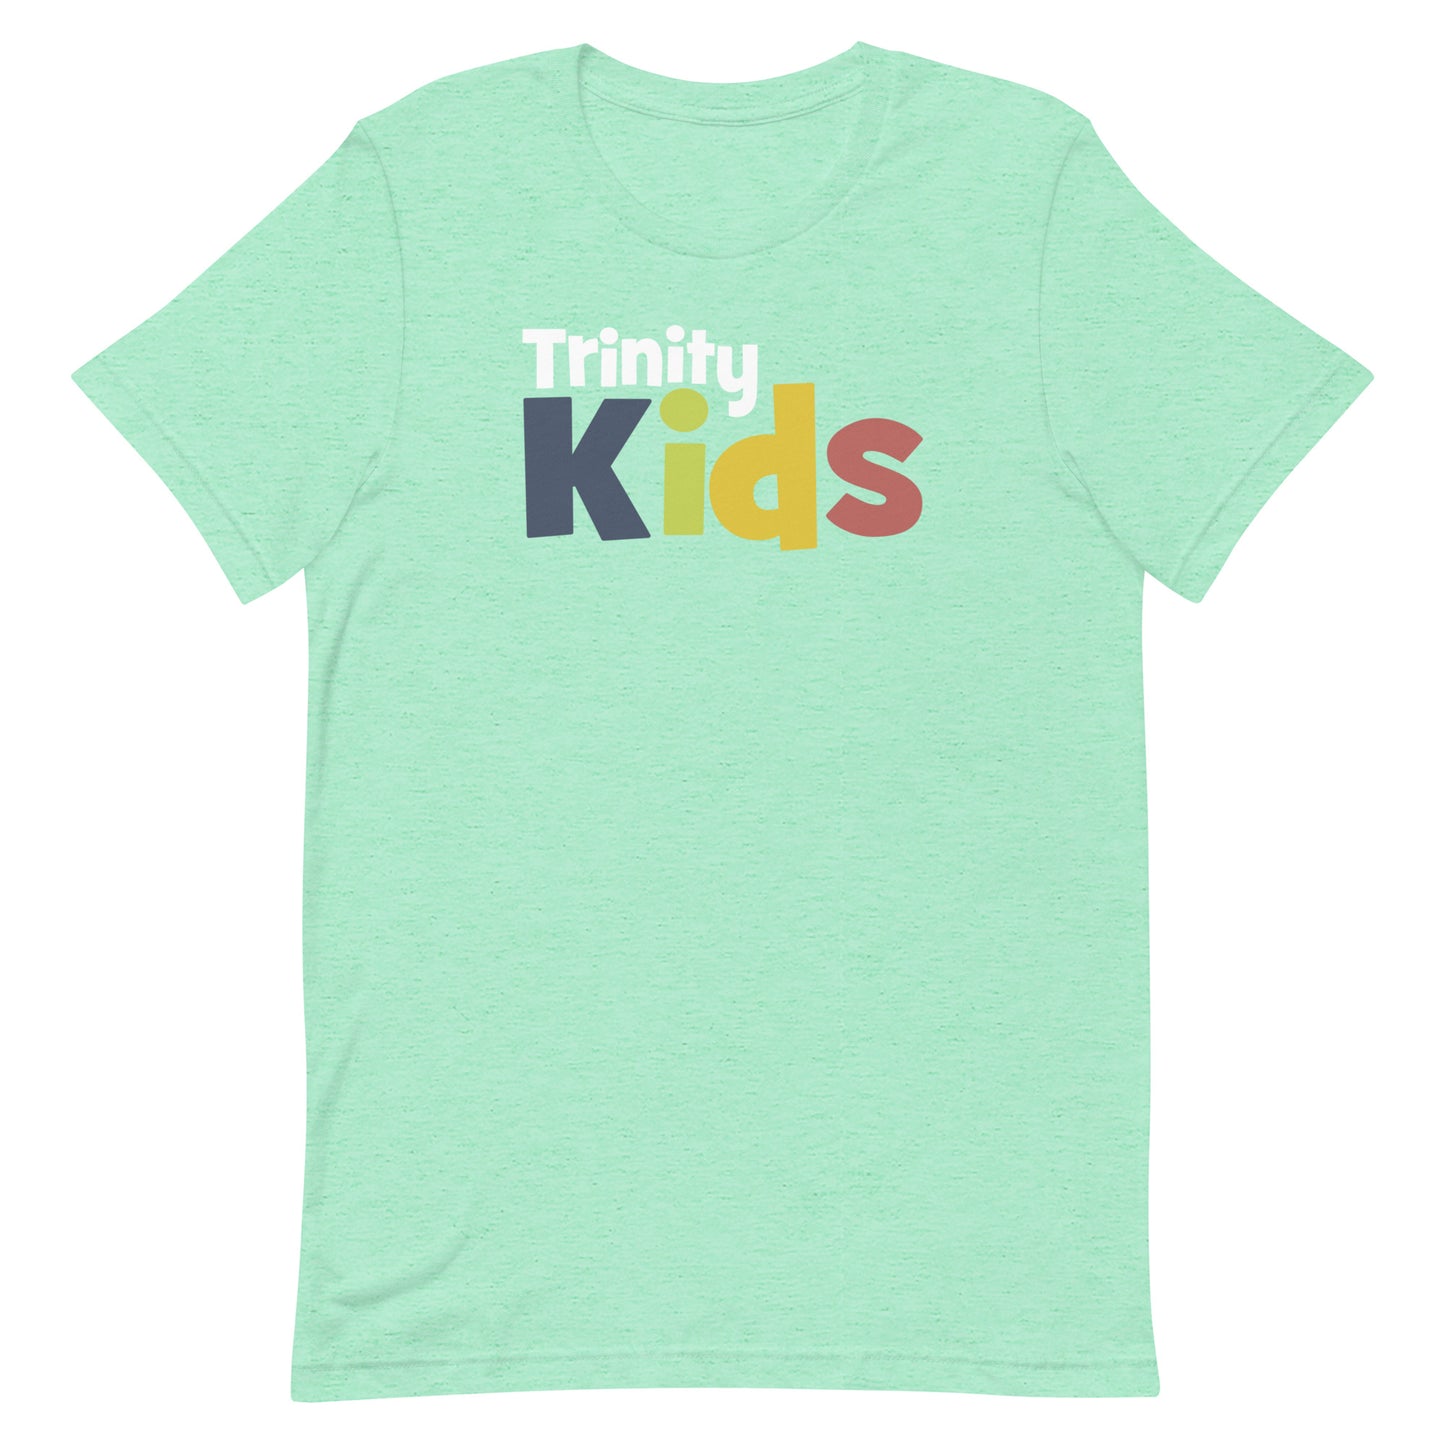 TrinityKids Adult Unisex T-Shirt